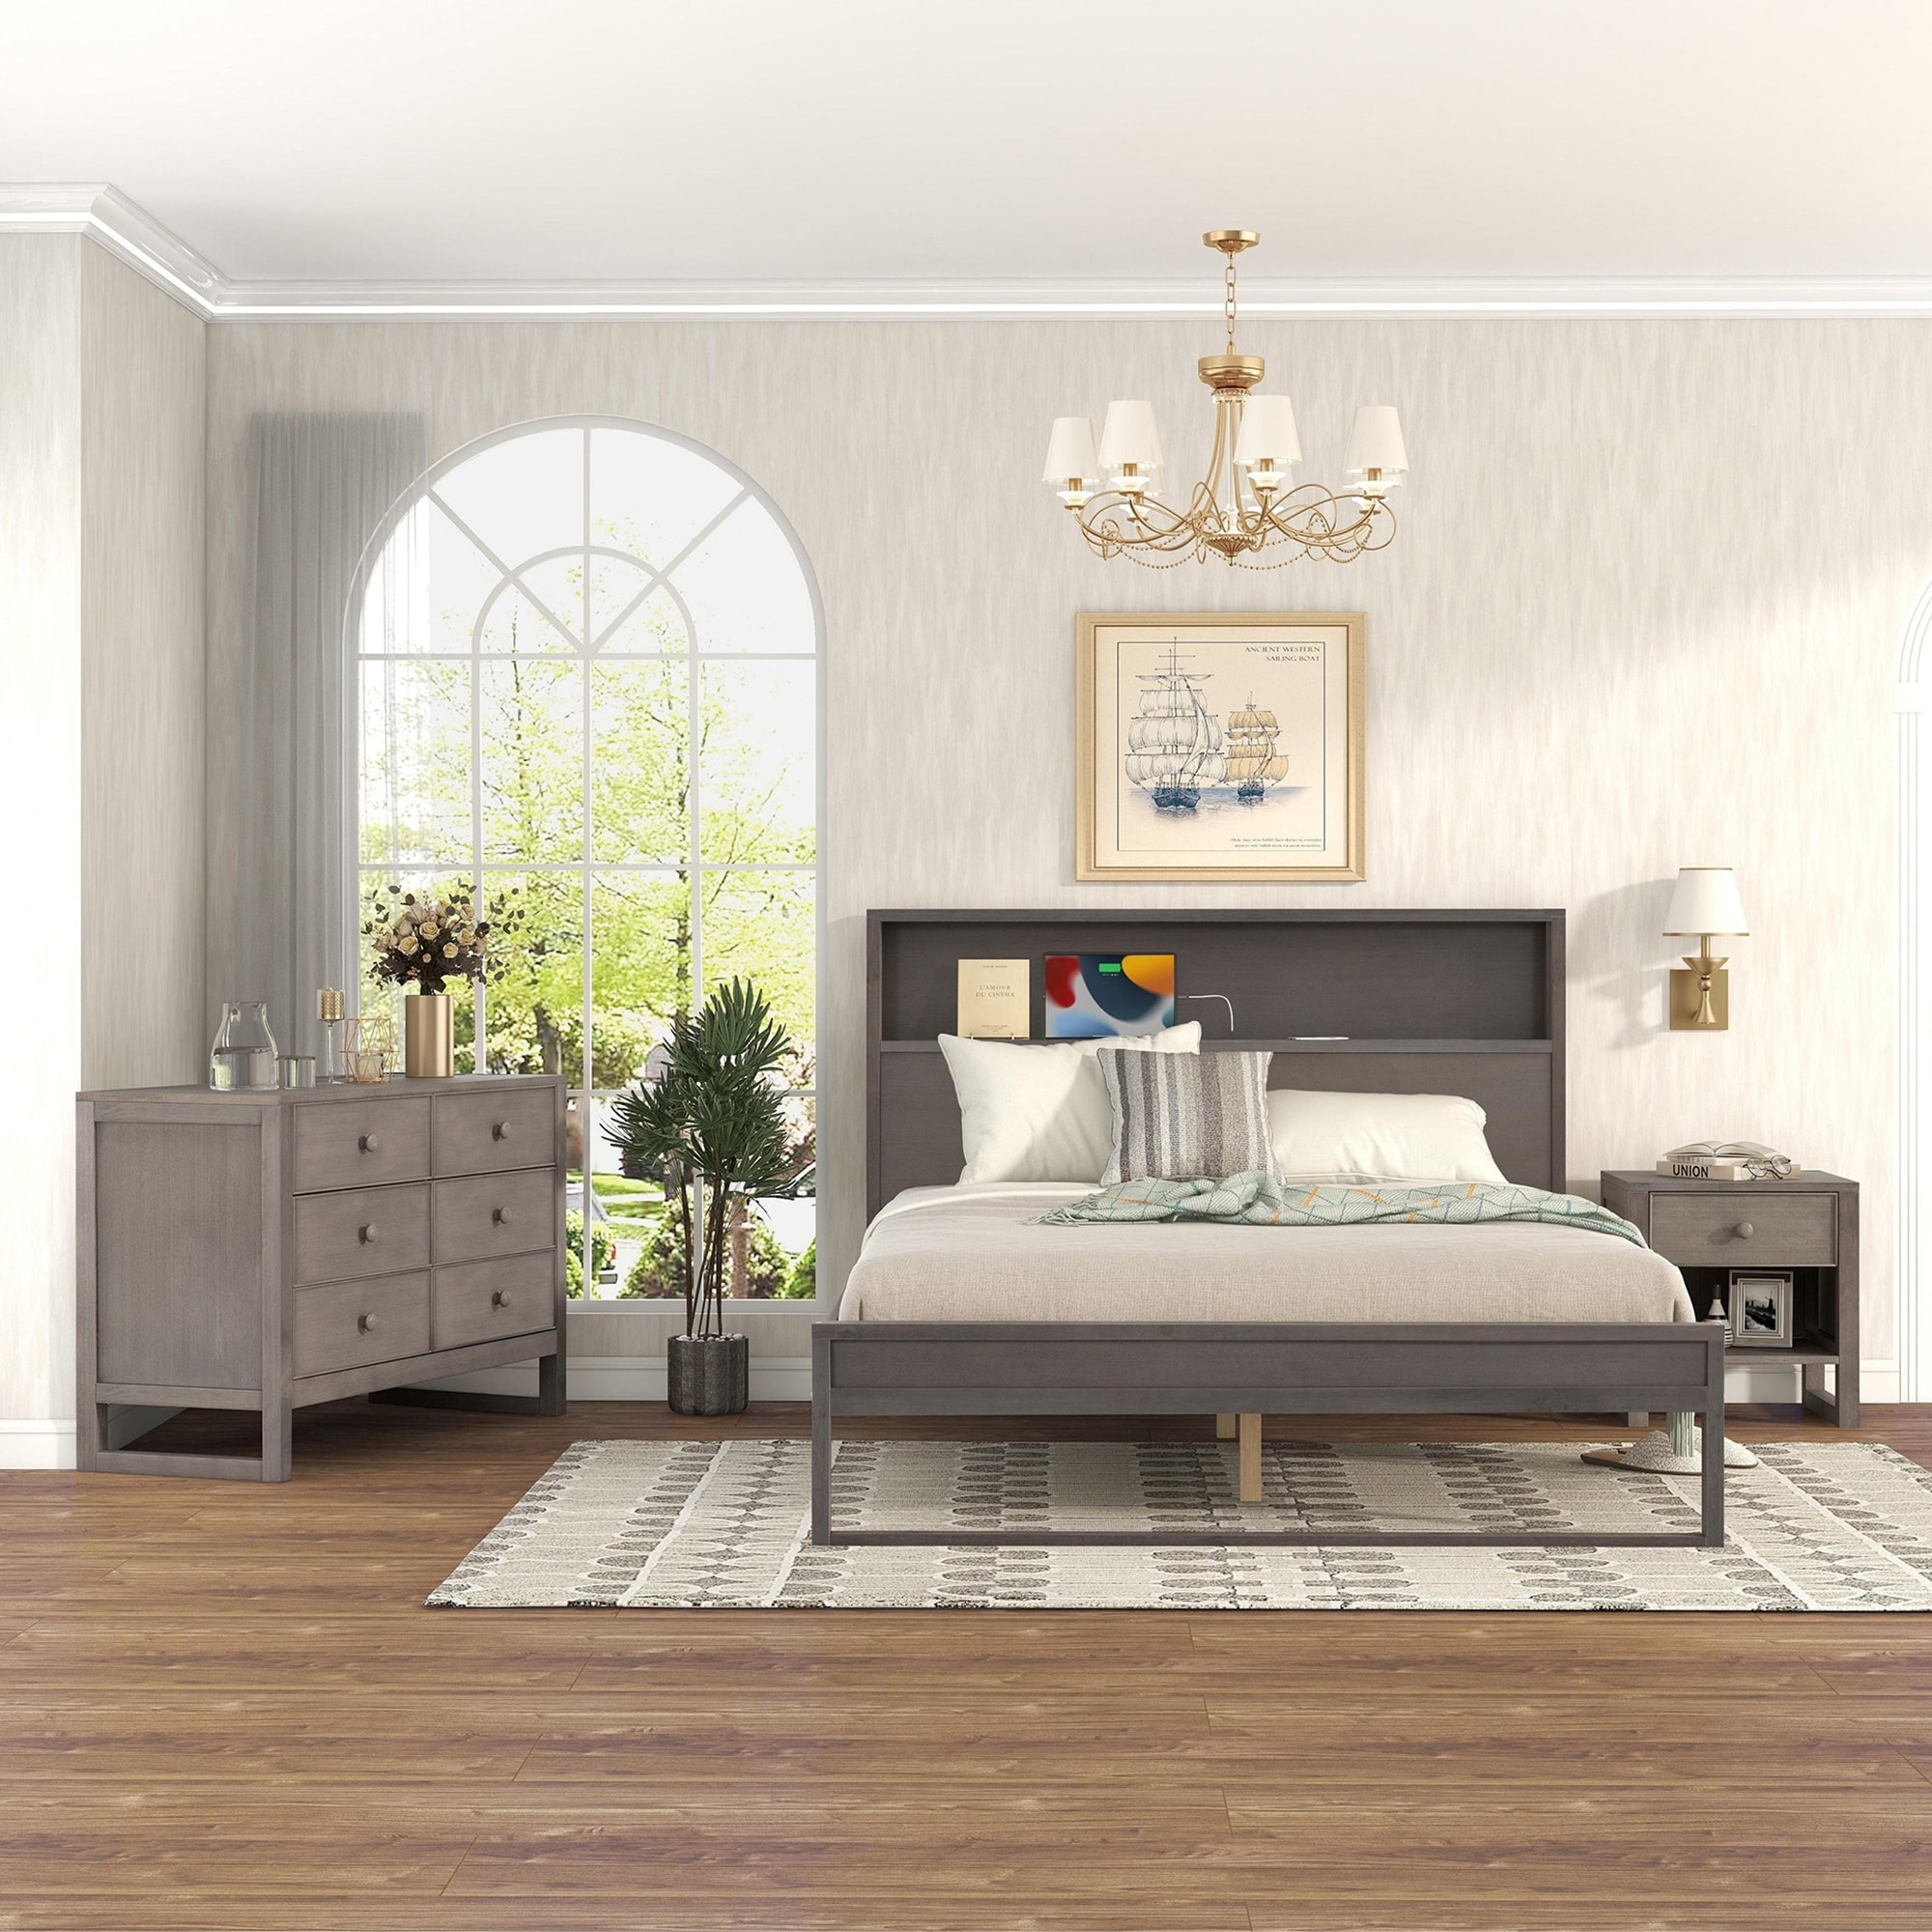 Queen Size 3-pieces Bedroom Sets Usb Port Platform Bed With Nightstand And Dresser